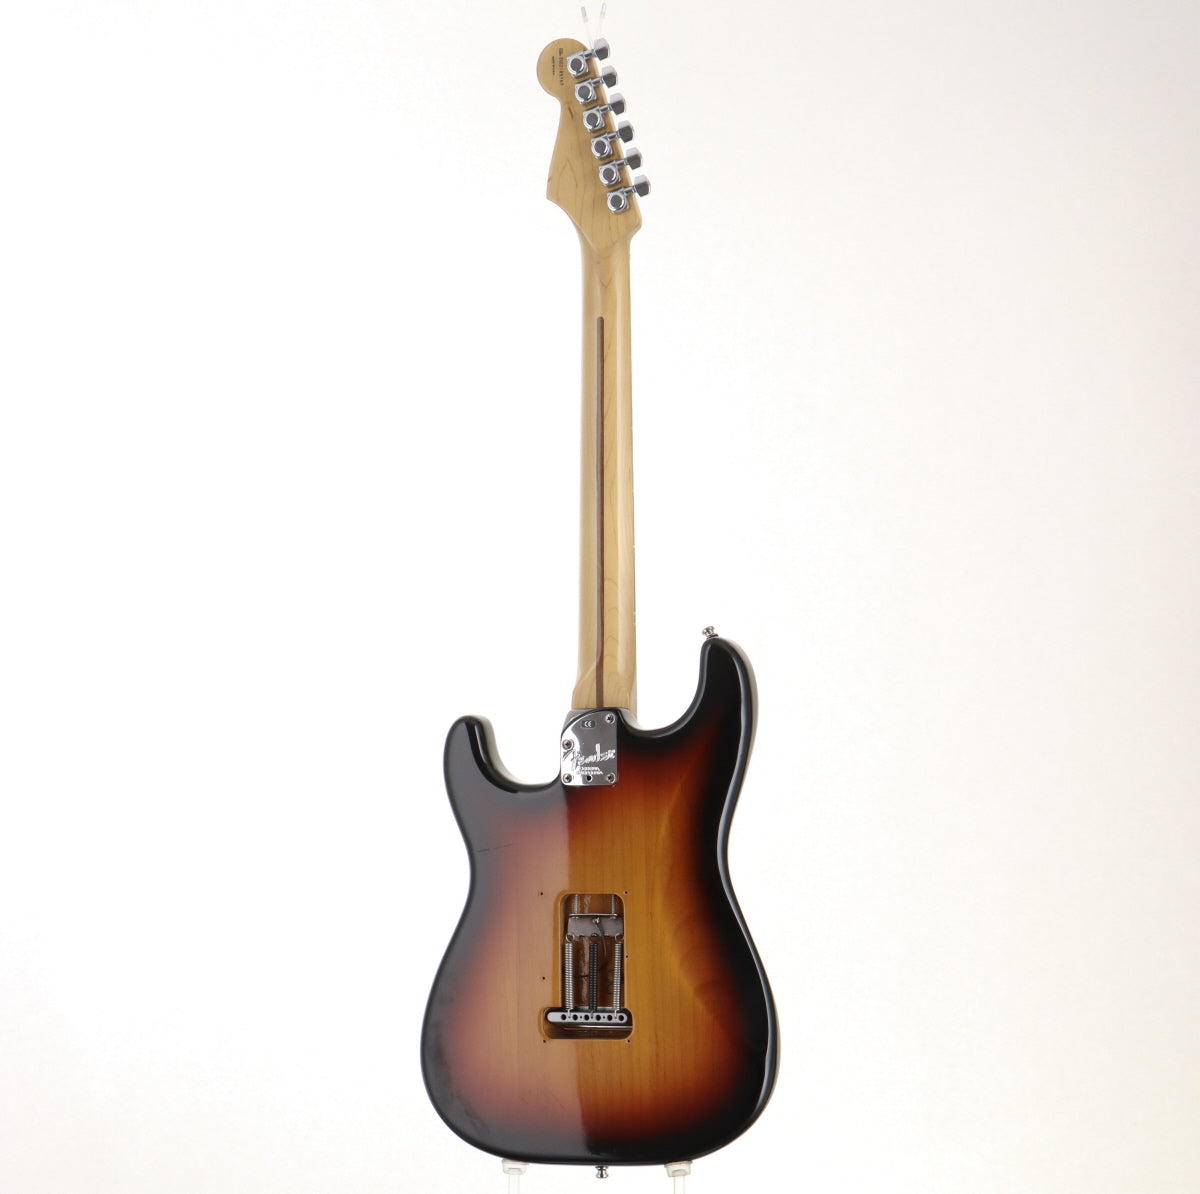 [SN DZ2185767] USED Fender / American Deluxe Fat Stratocaster 3-Color Sunburst 2003 [09]